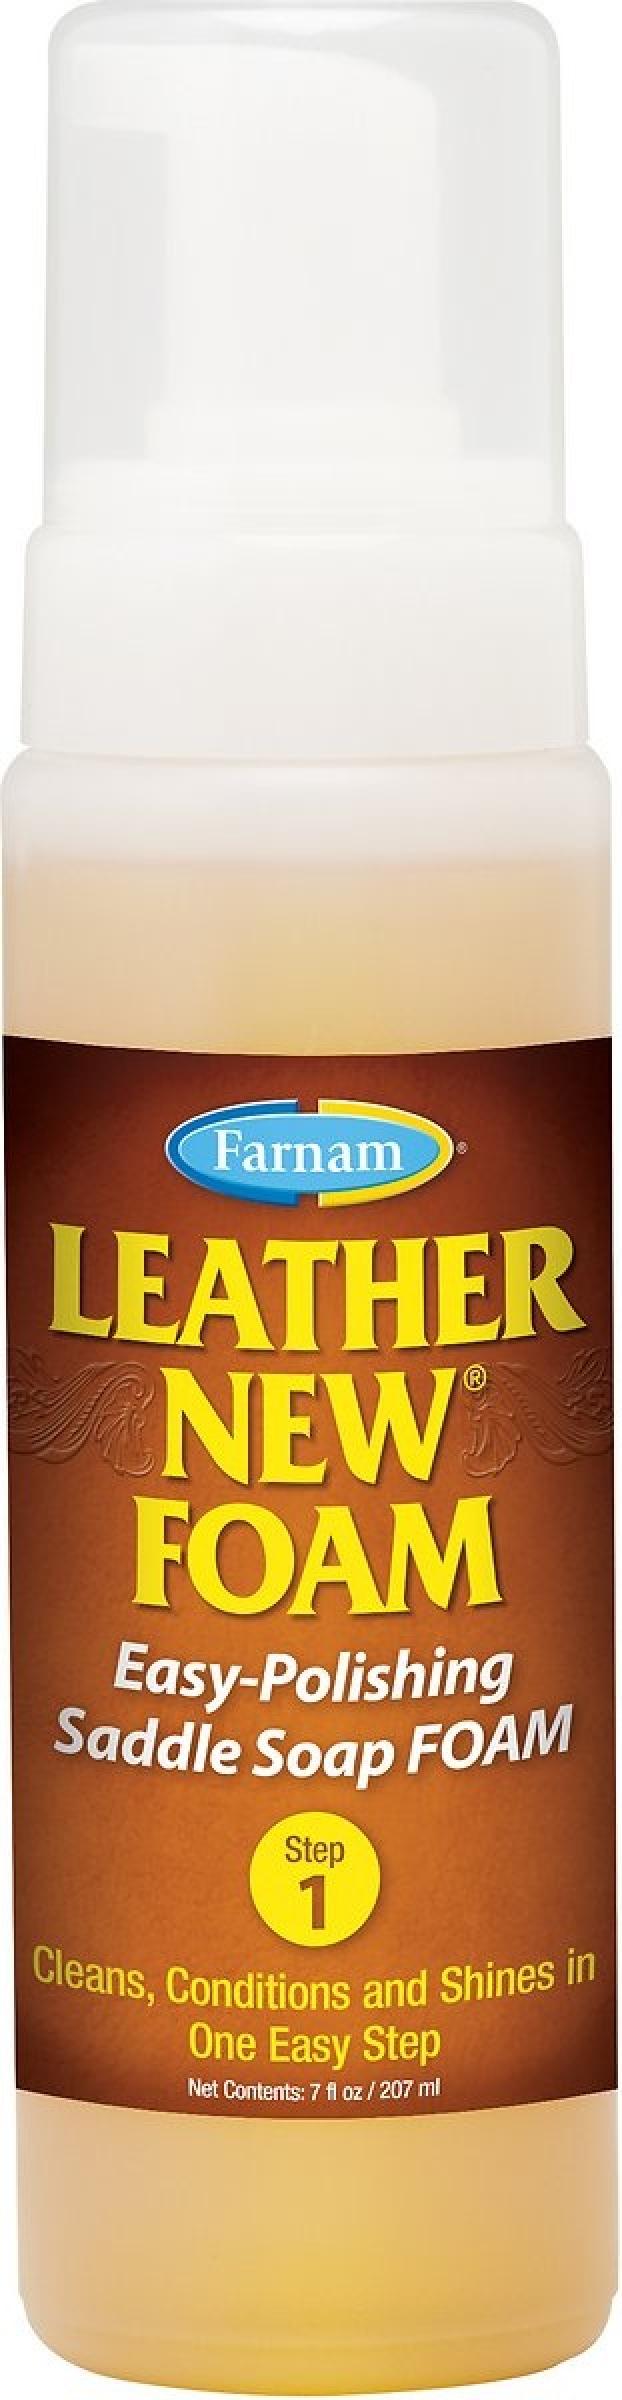 Farnam Leather New Foam Easy-Polishing Saddle Soap Foam